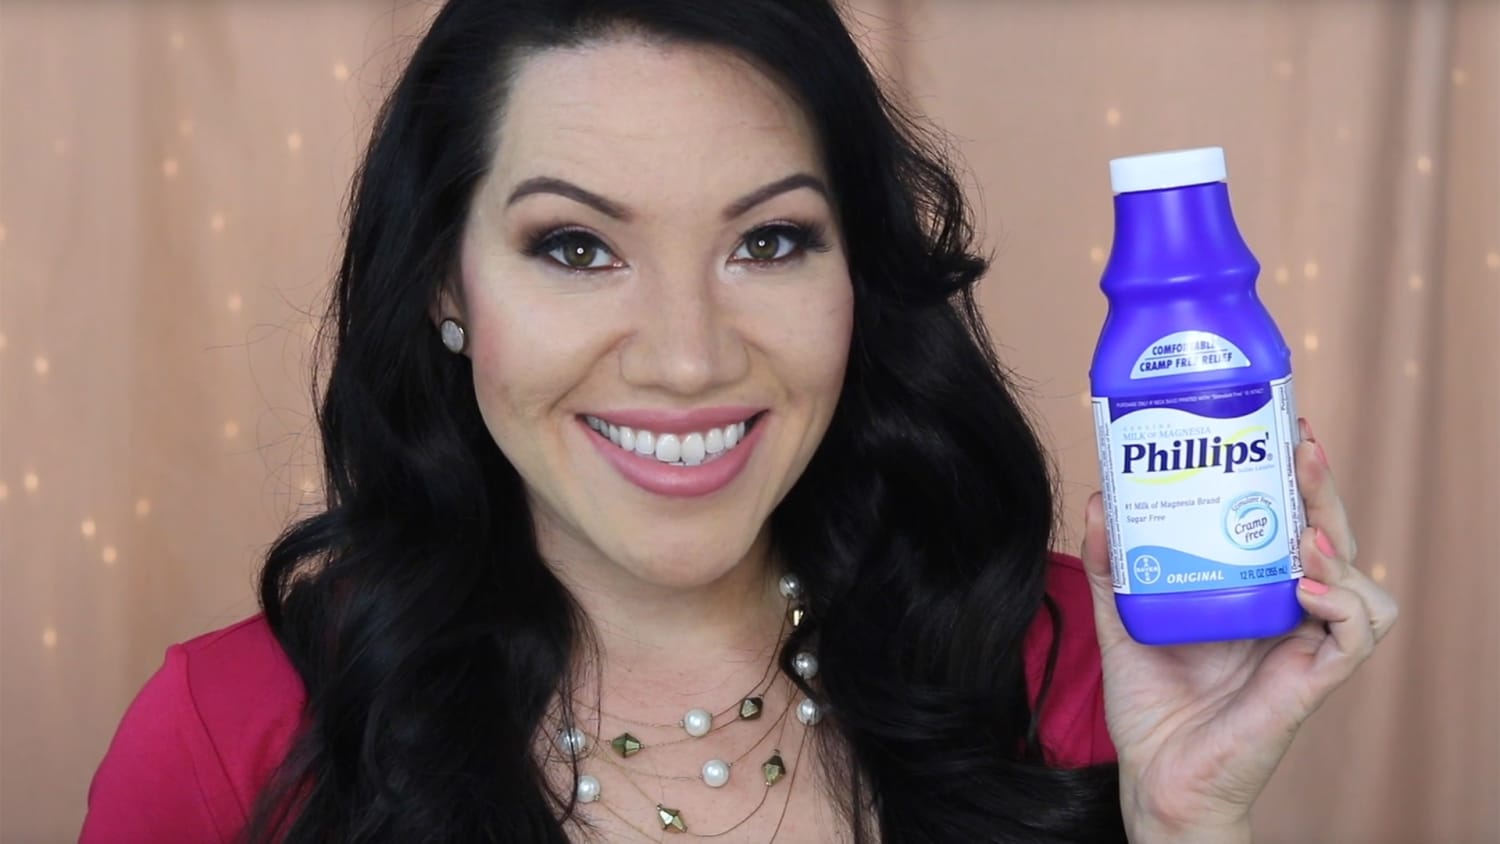 Milk of Magnesia as makeup primer? See the strange tip